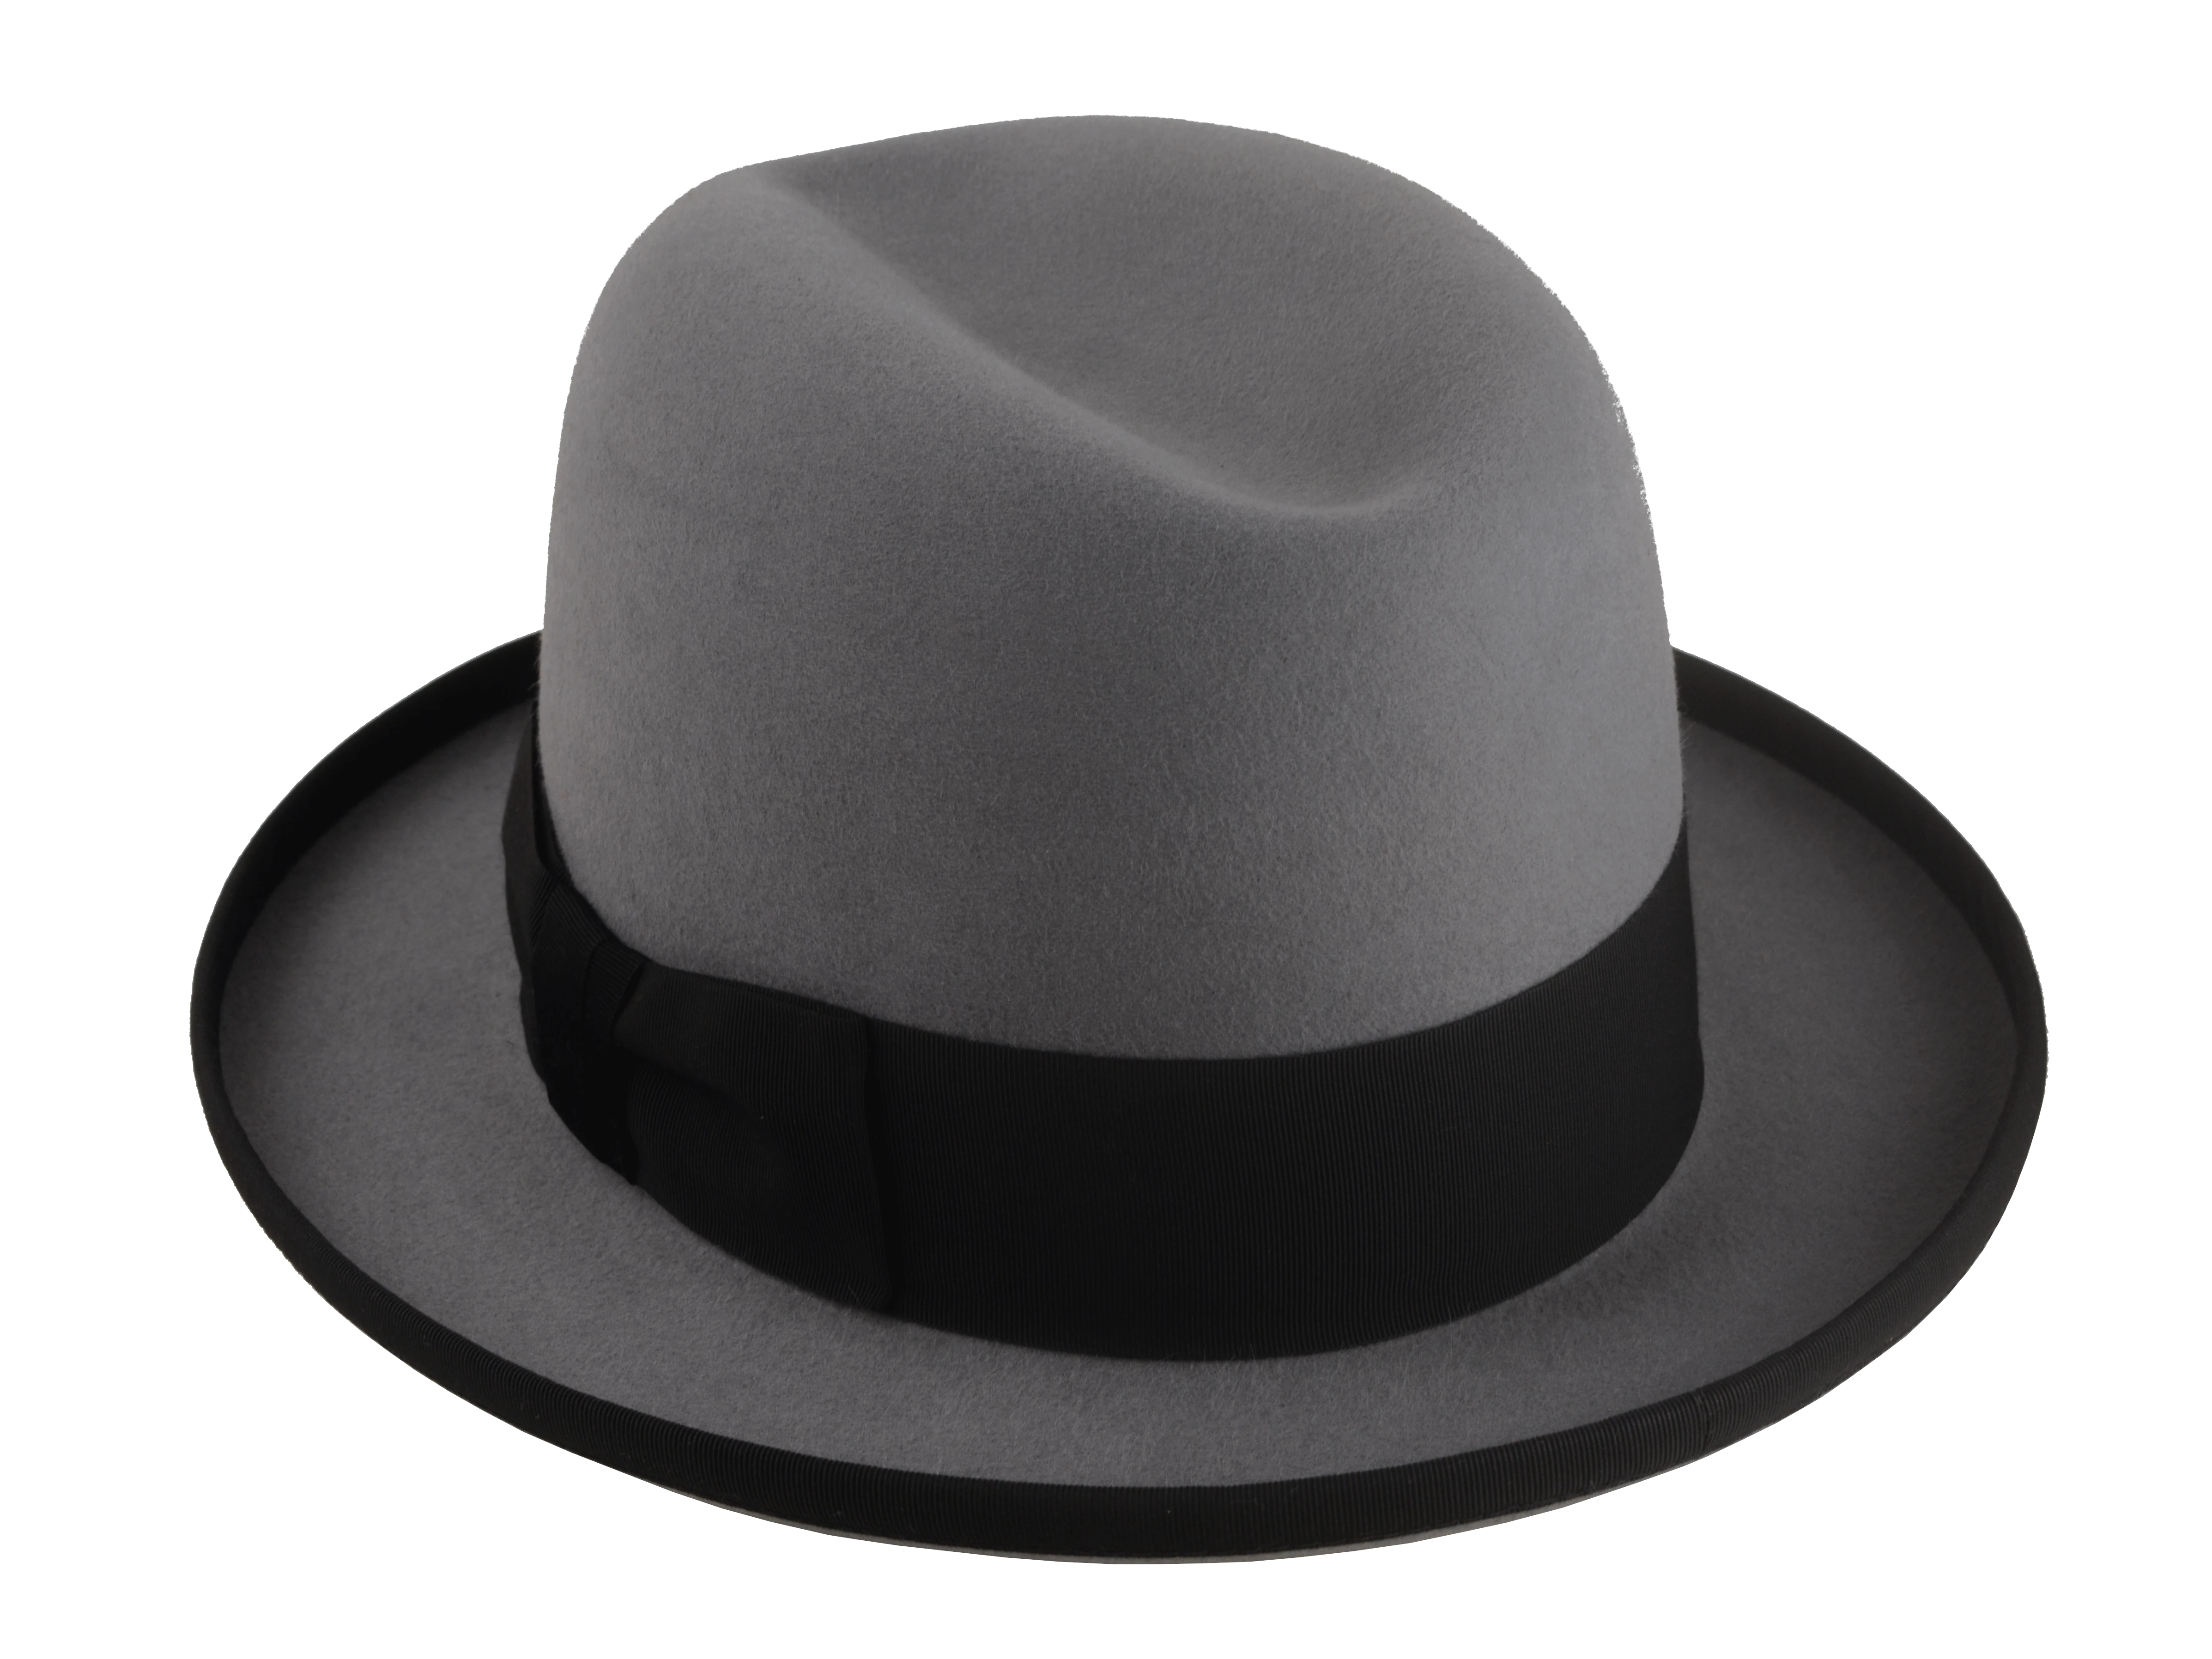 The Cerebelle: Top view showcasing the hat's impeccable design symmetry | Agnoulita Hats